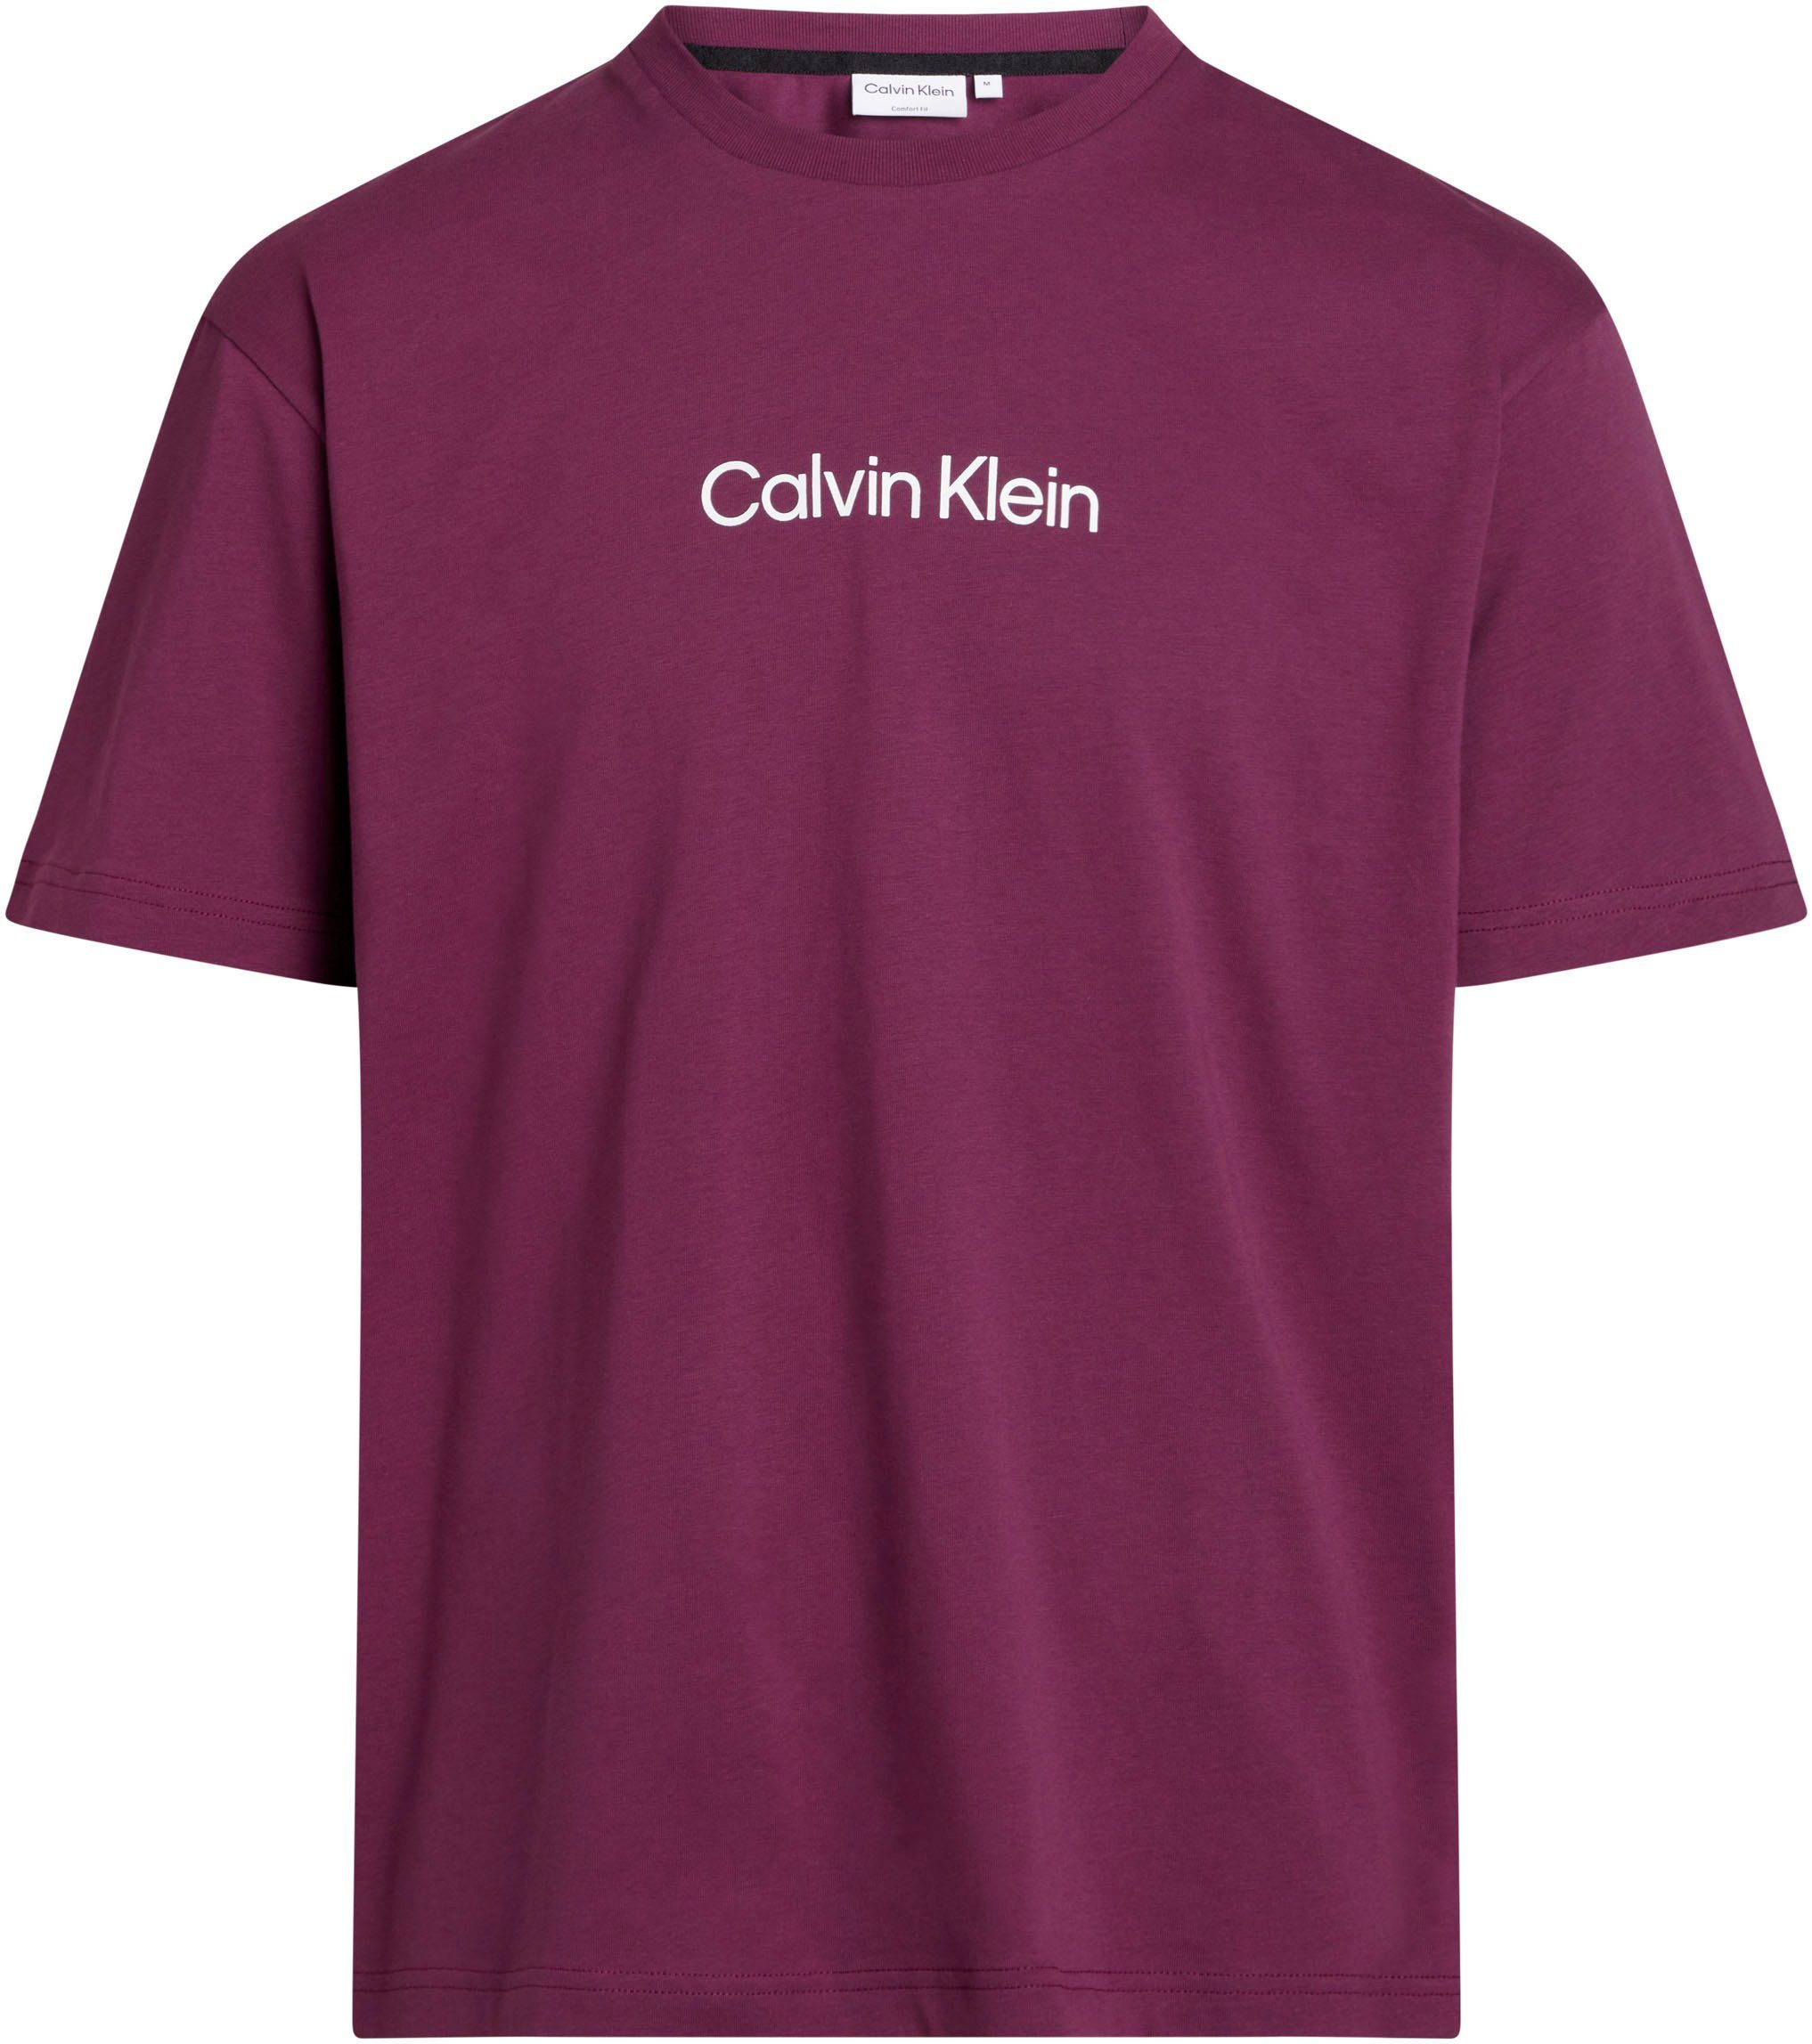 Plum HERO Markenlabel Italian T-SHIRT T-Shirt Klein COMFORT aufgedrucktem LOGO mit Calvin